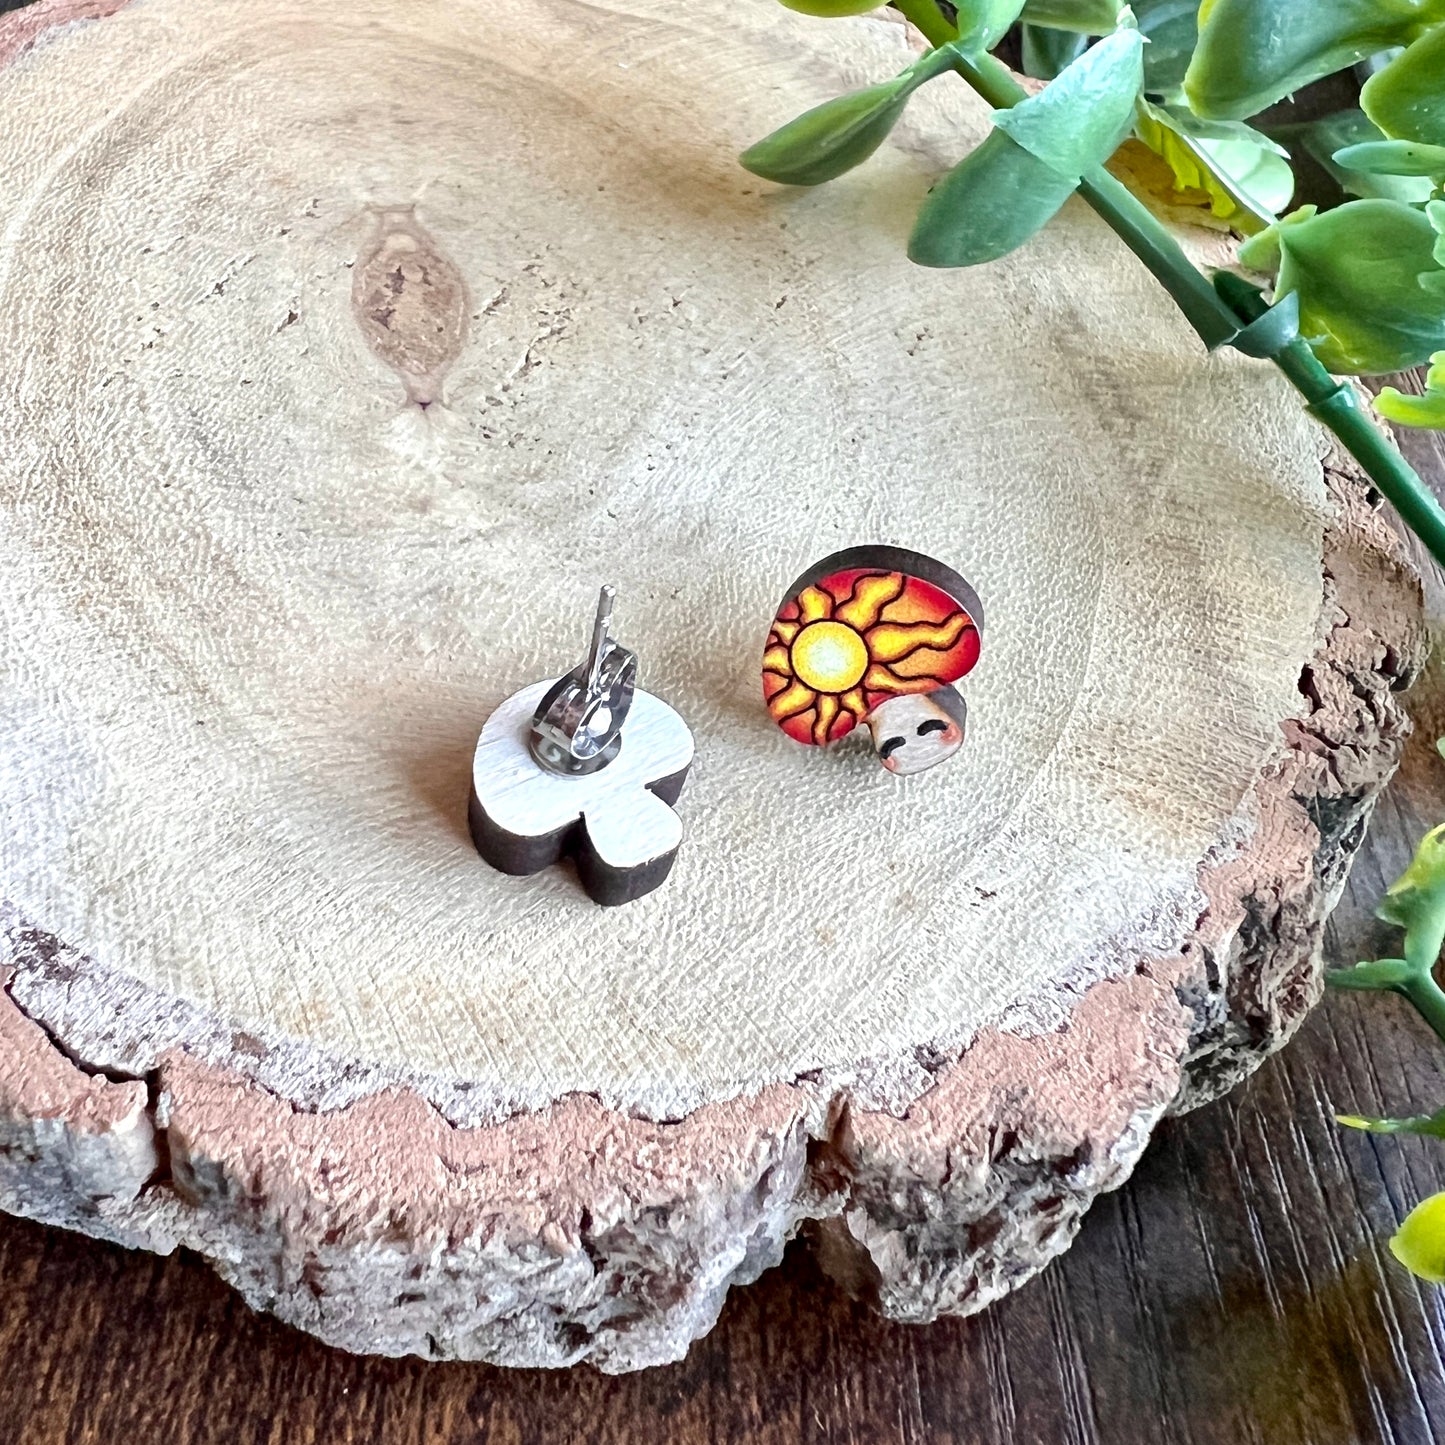 Dawn Mushroom Wooden Earrings